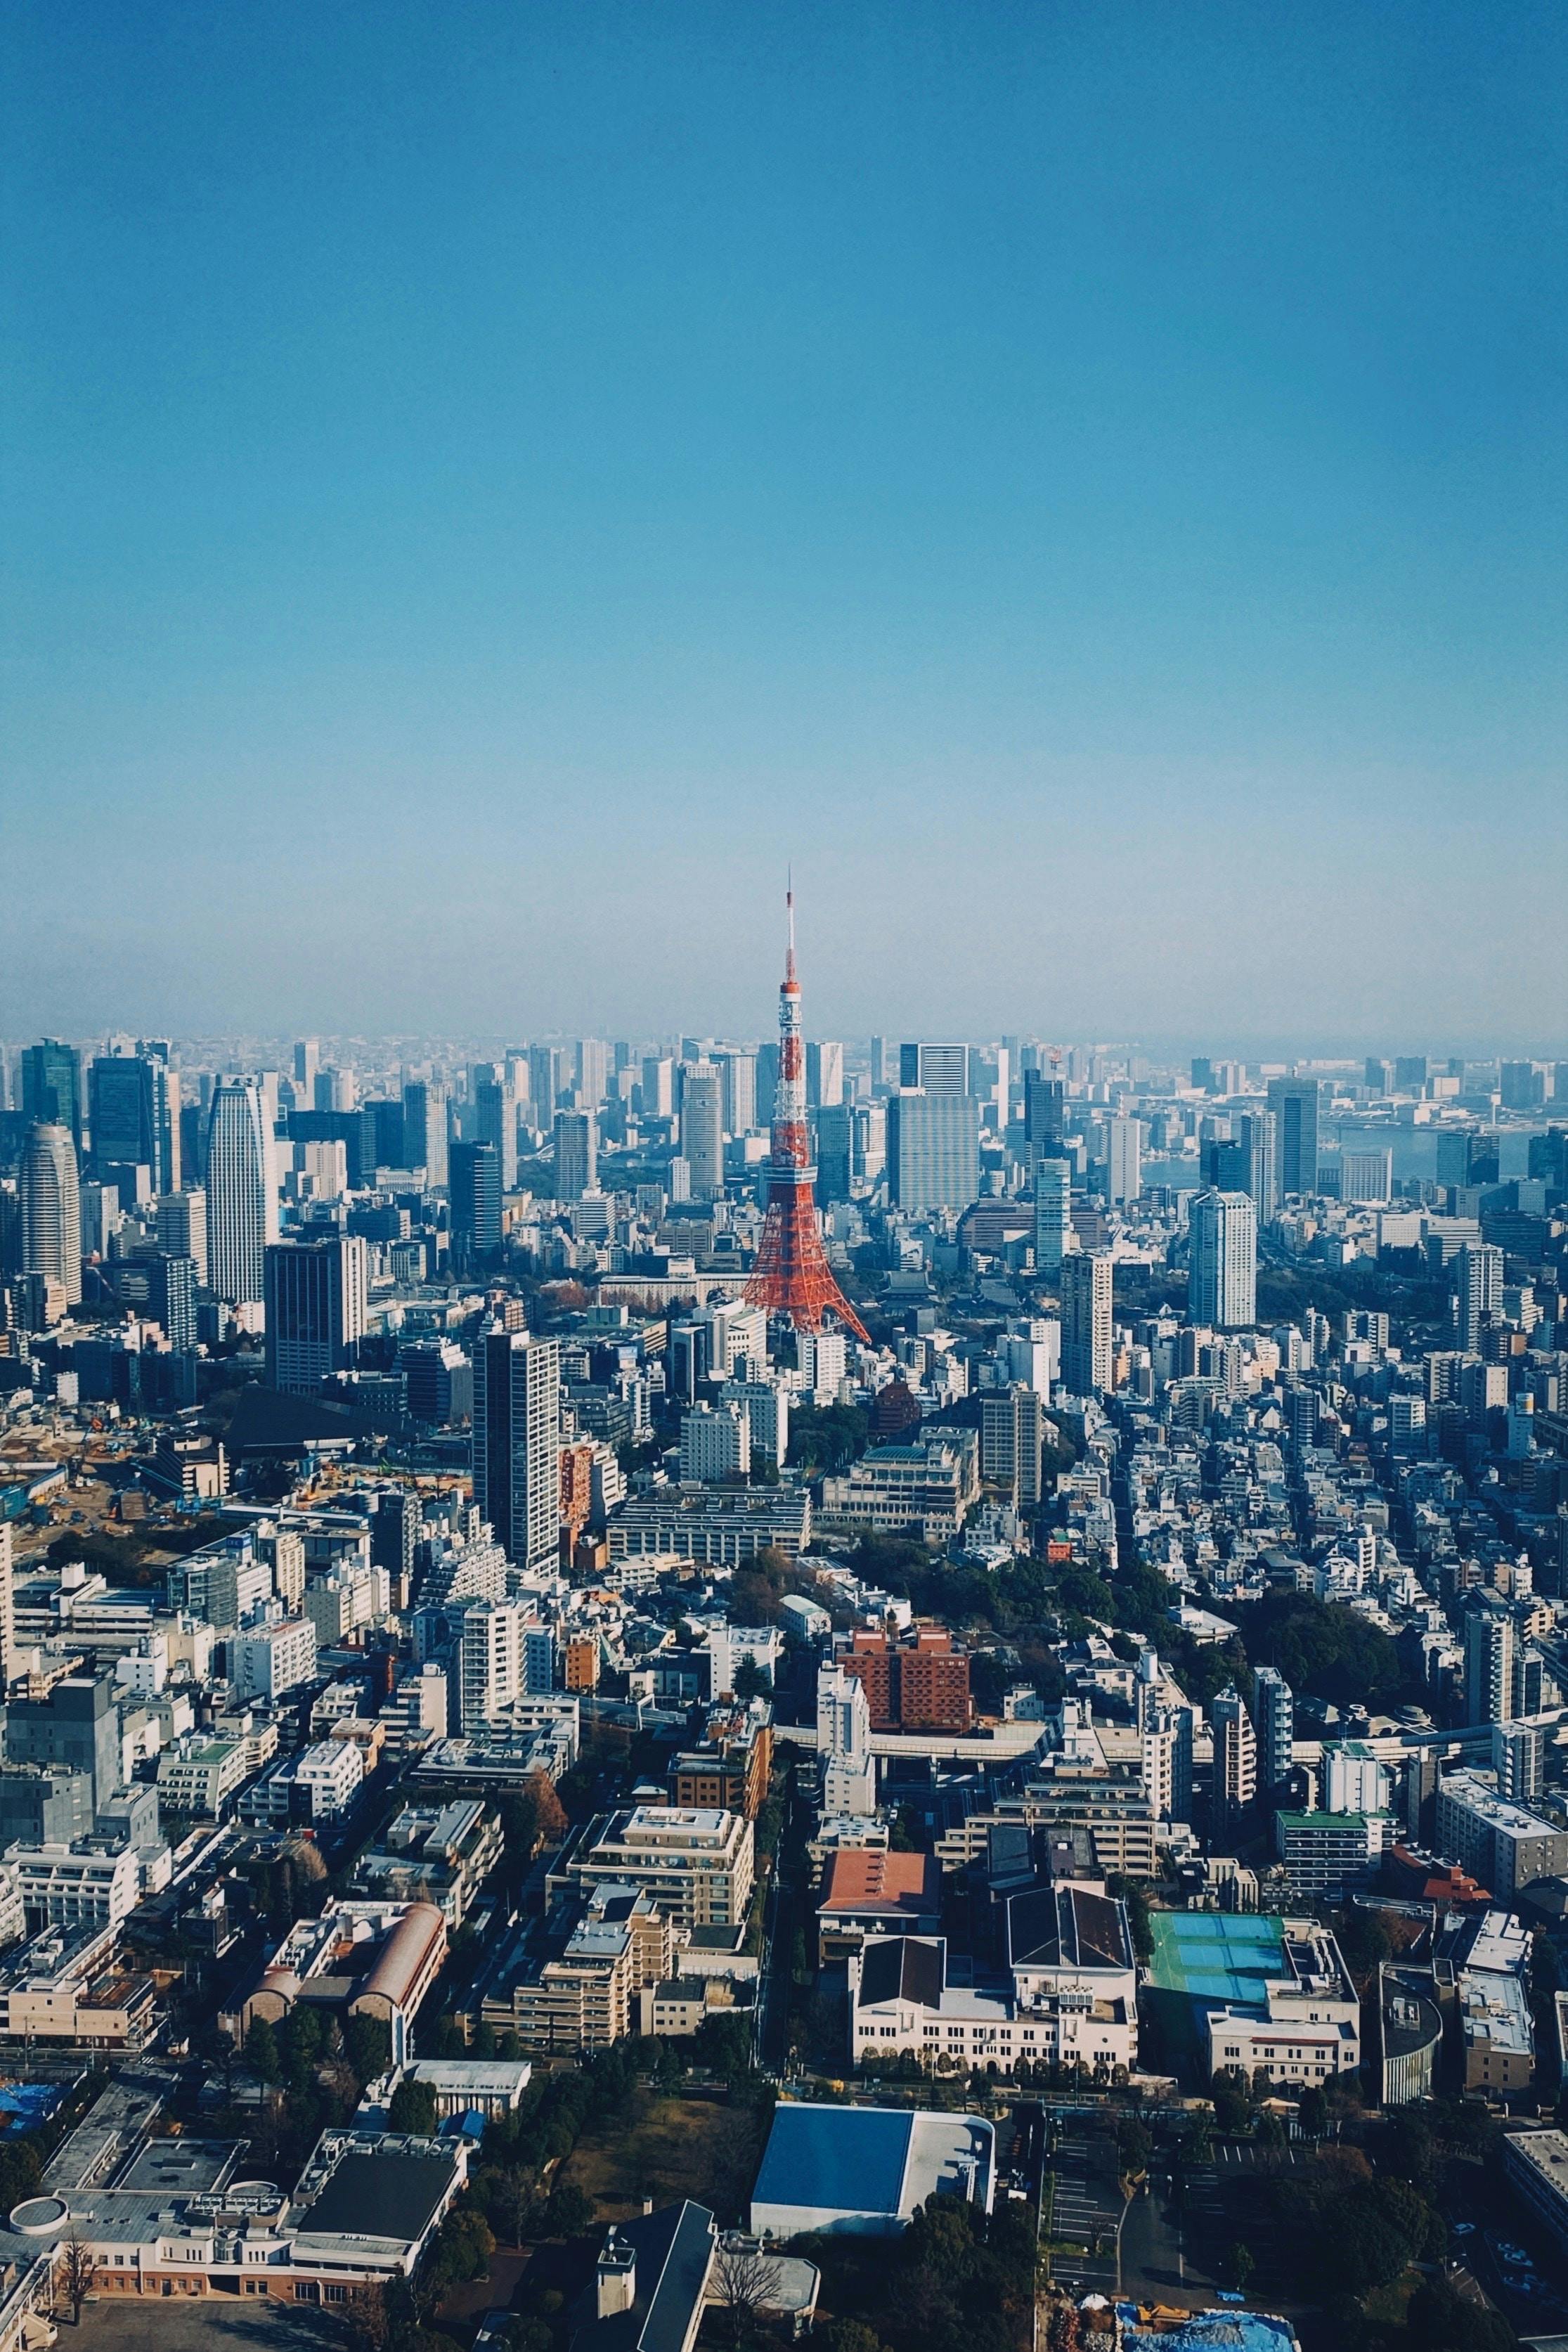 Aerial view of the Tokyo, Japan skyline